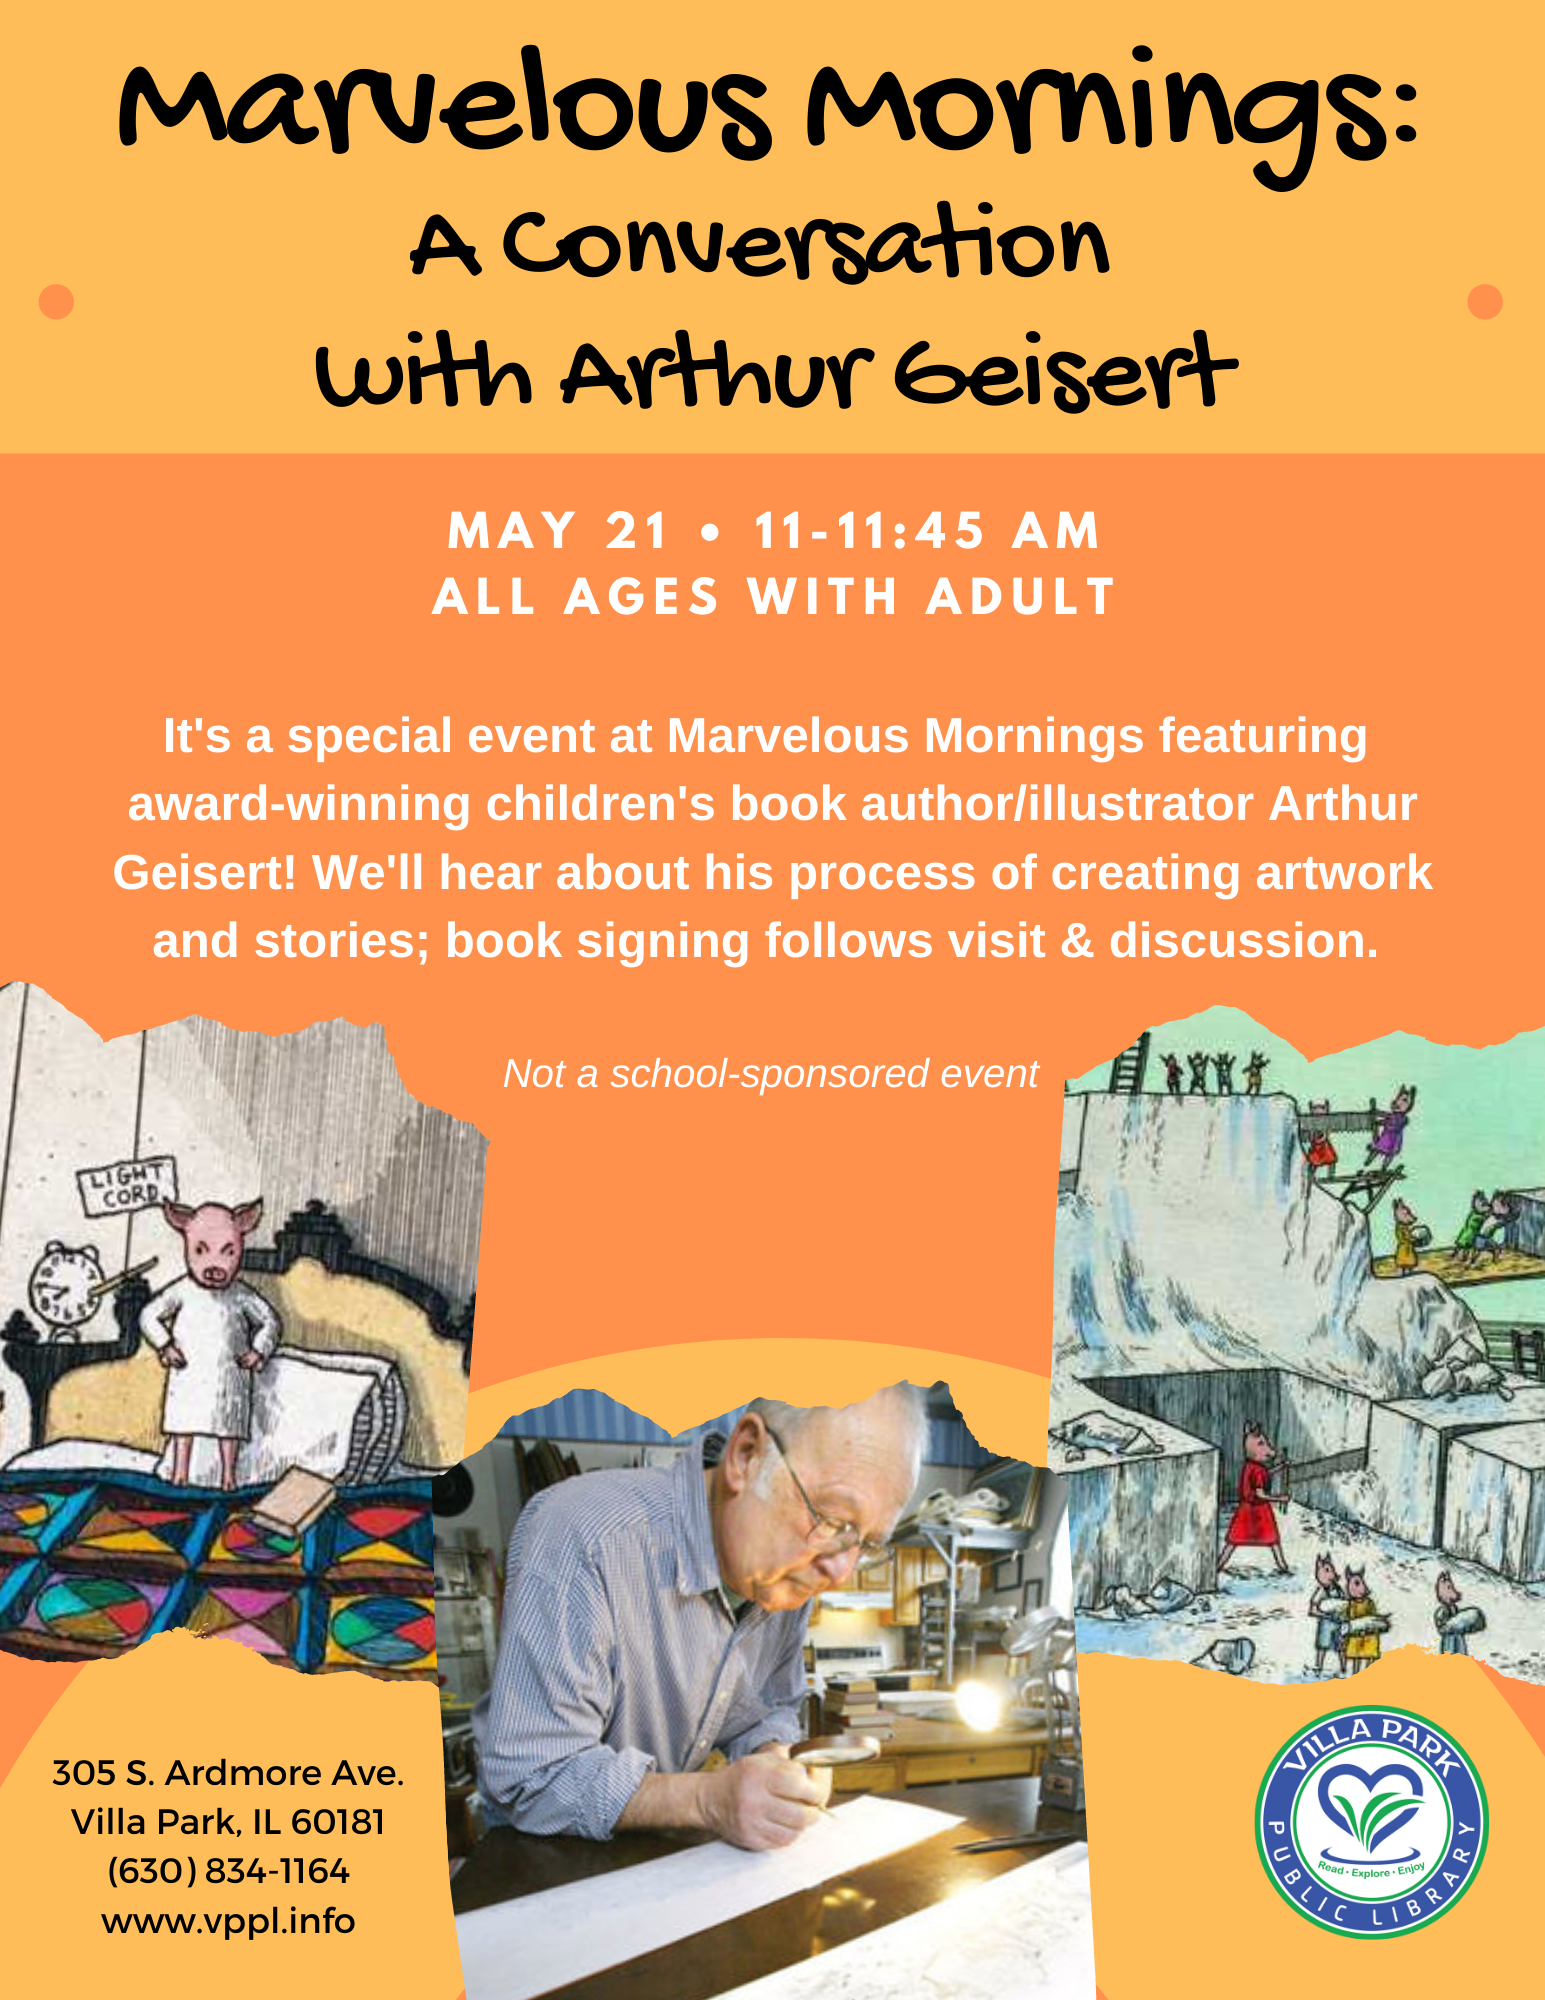 Arthur Geisert event flyer for May 21